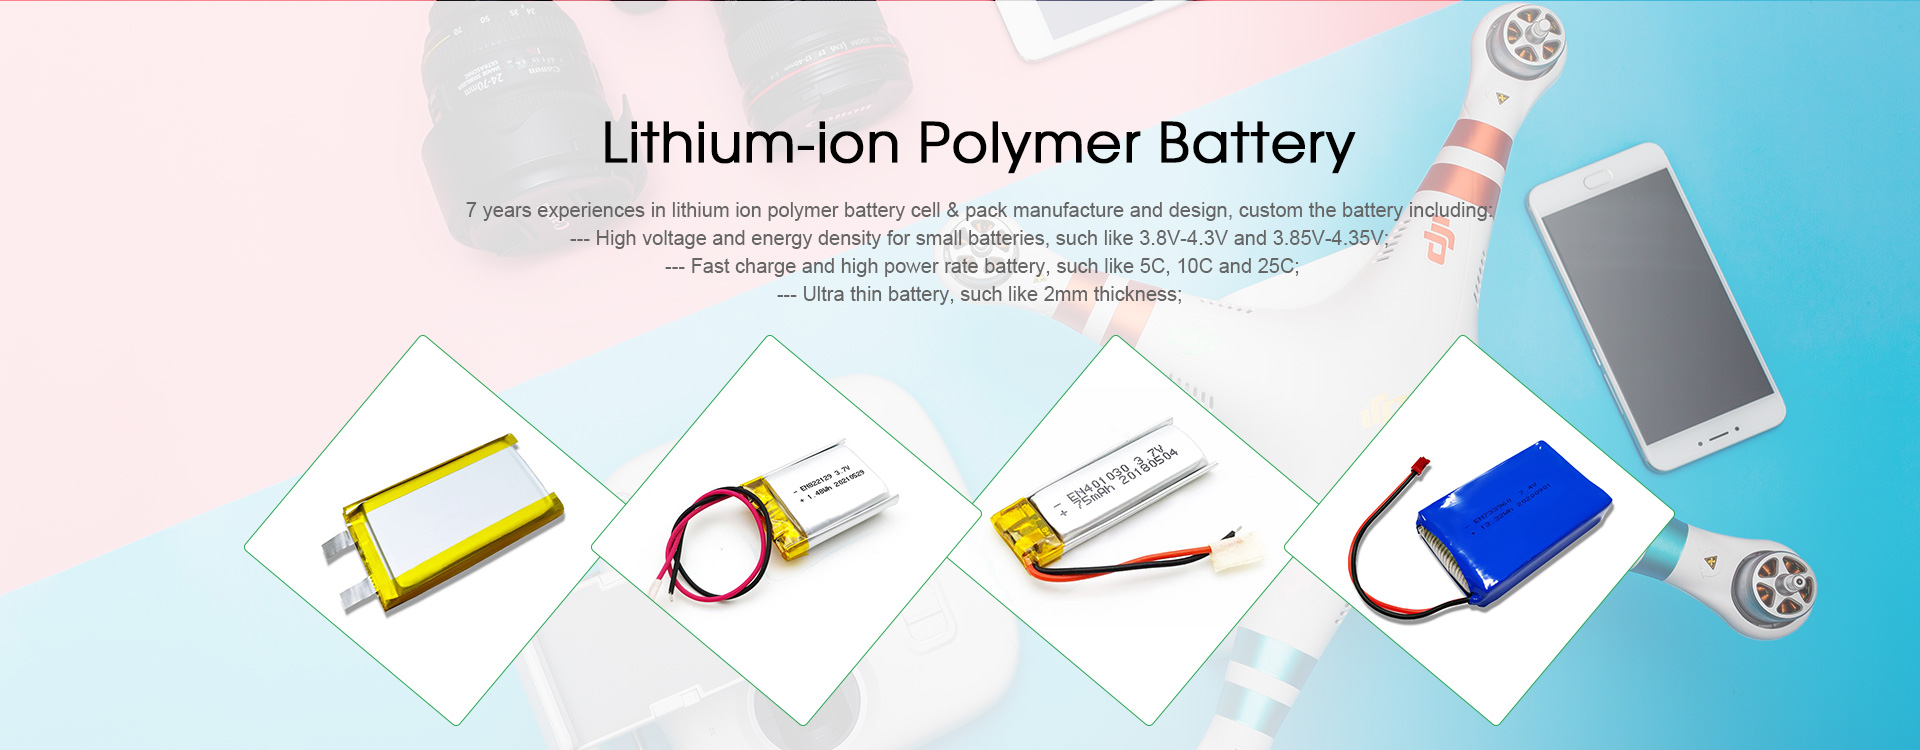 Monarcha Li Polymer Battery